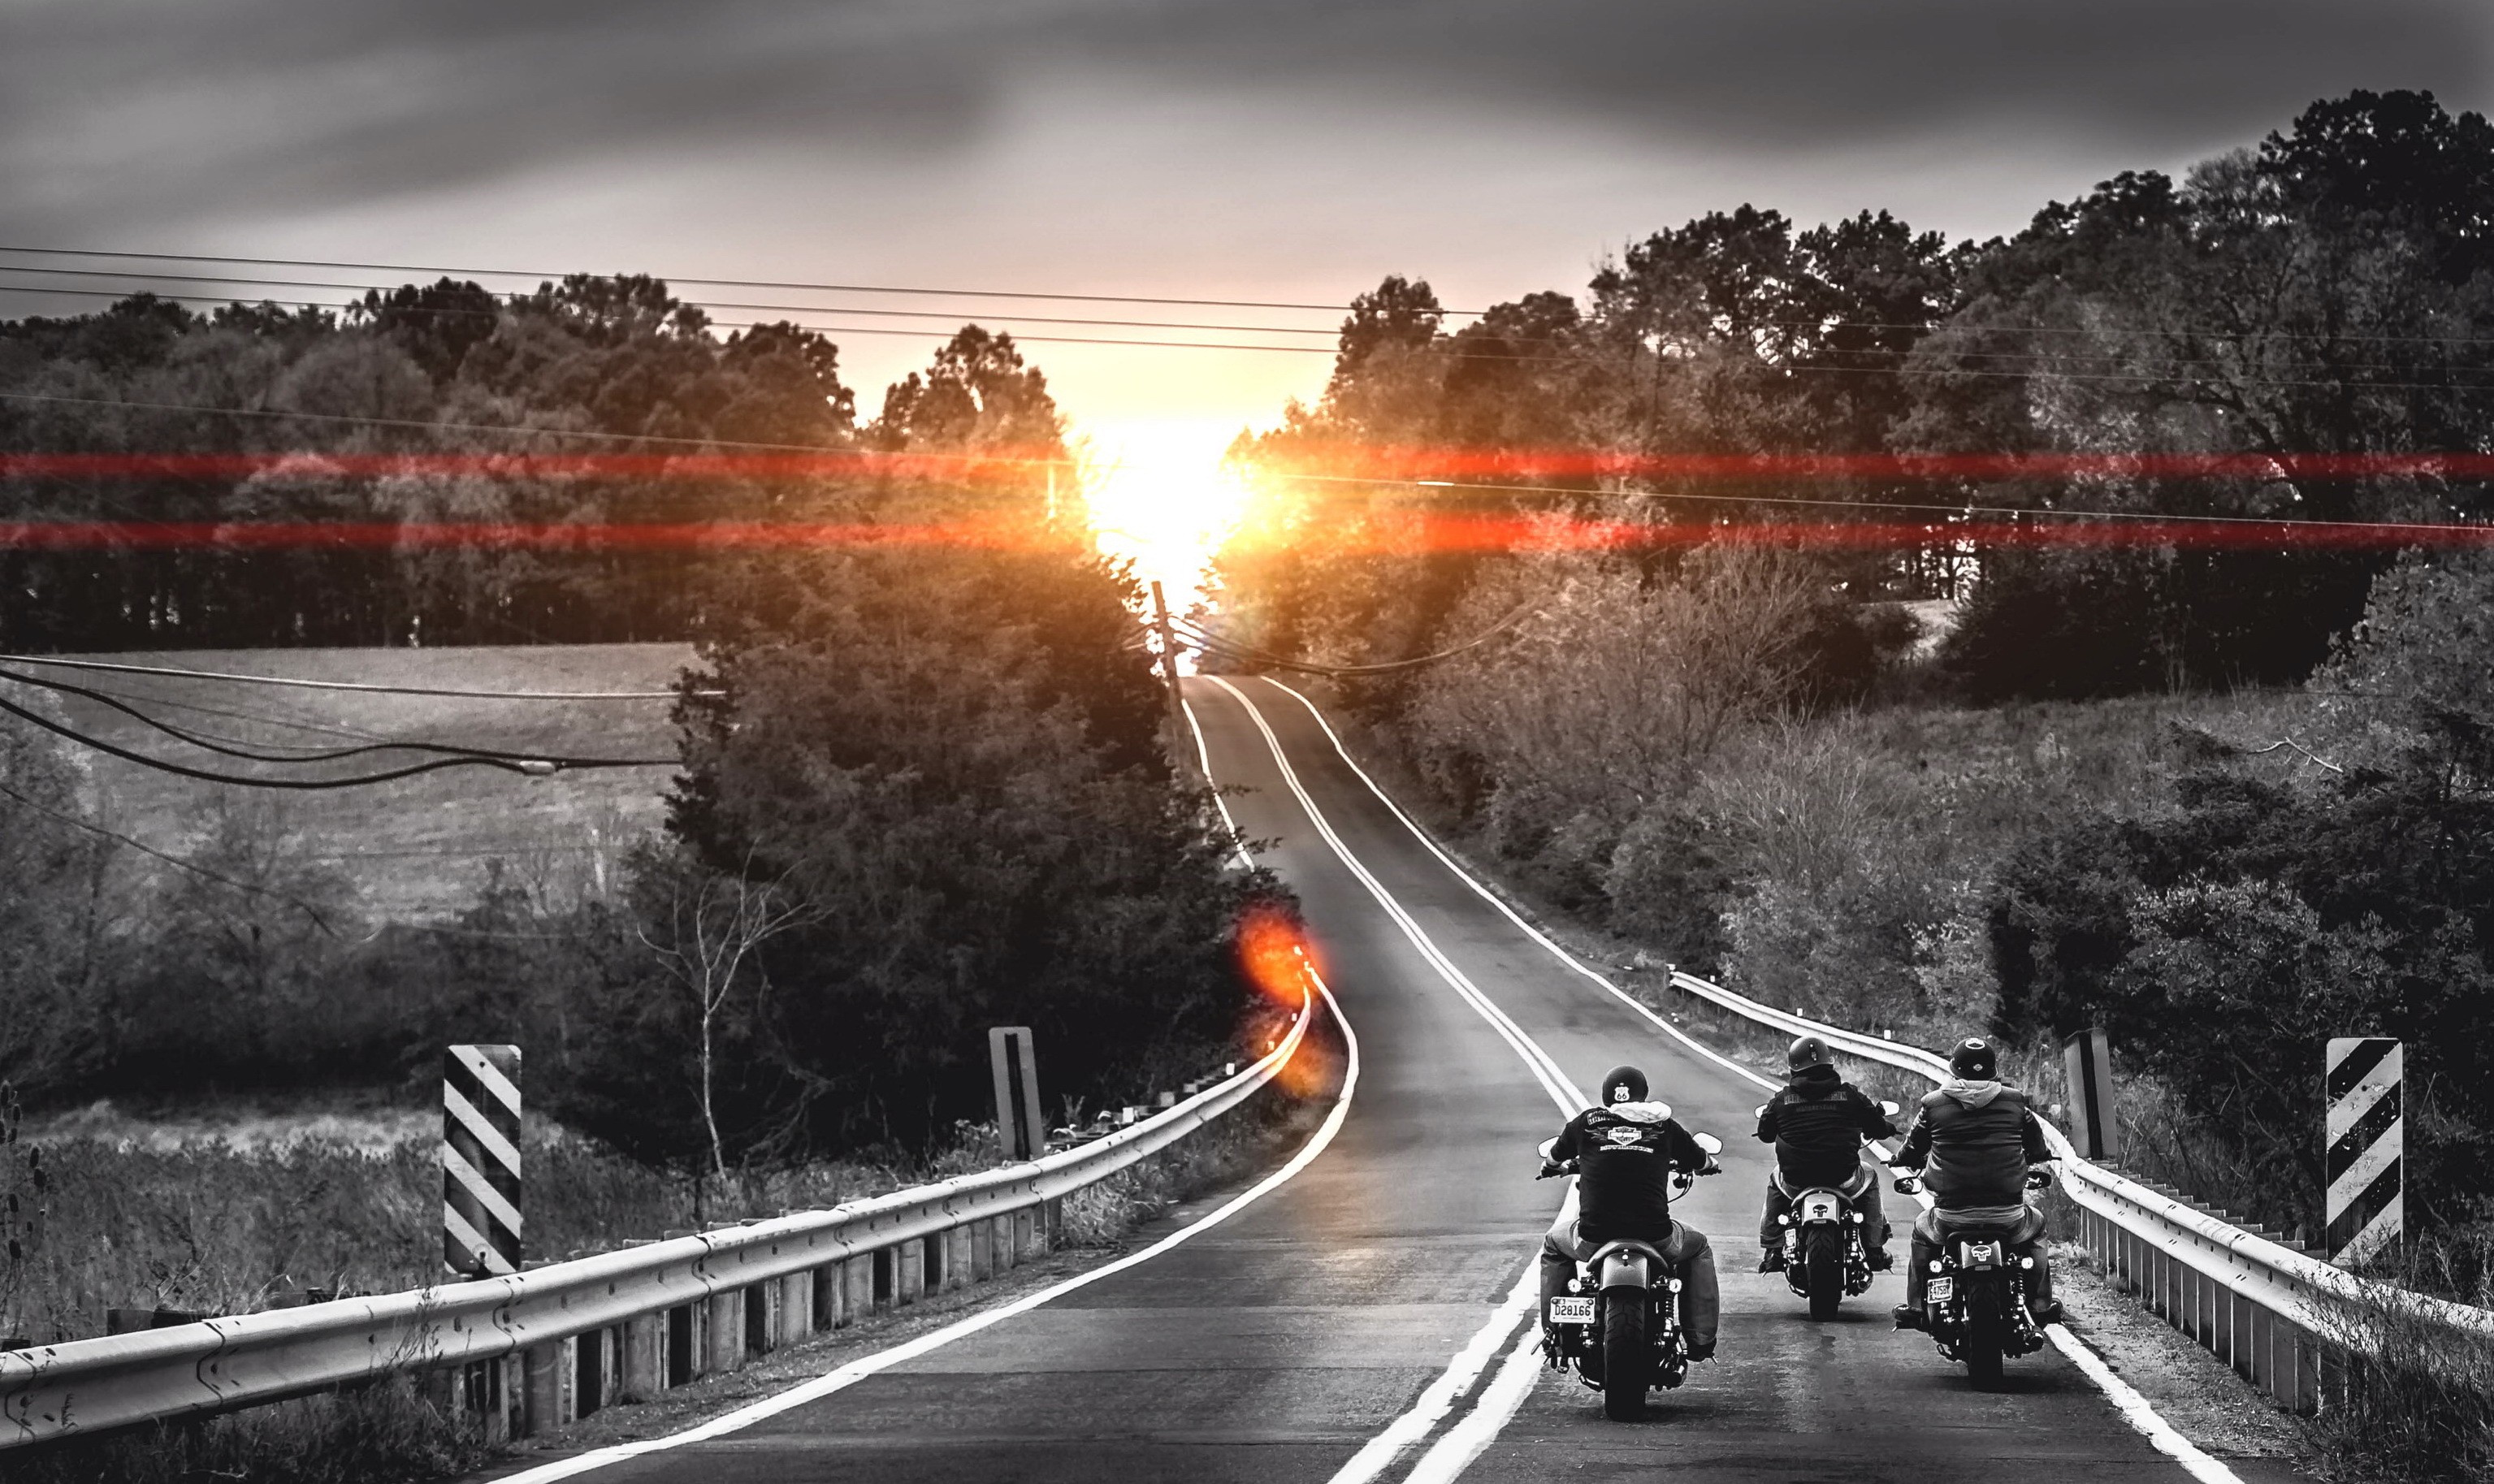 General 3070x1827 trees street road selective coloring sunset biker motorcycle vehicle sunlight asphalt